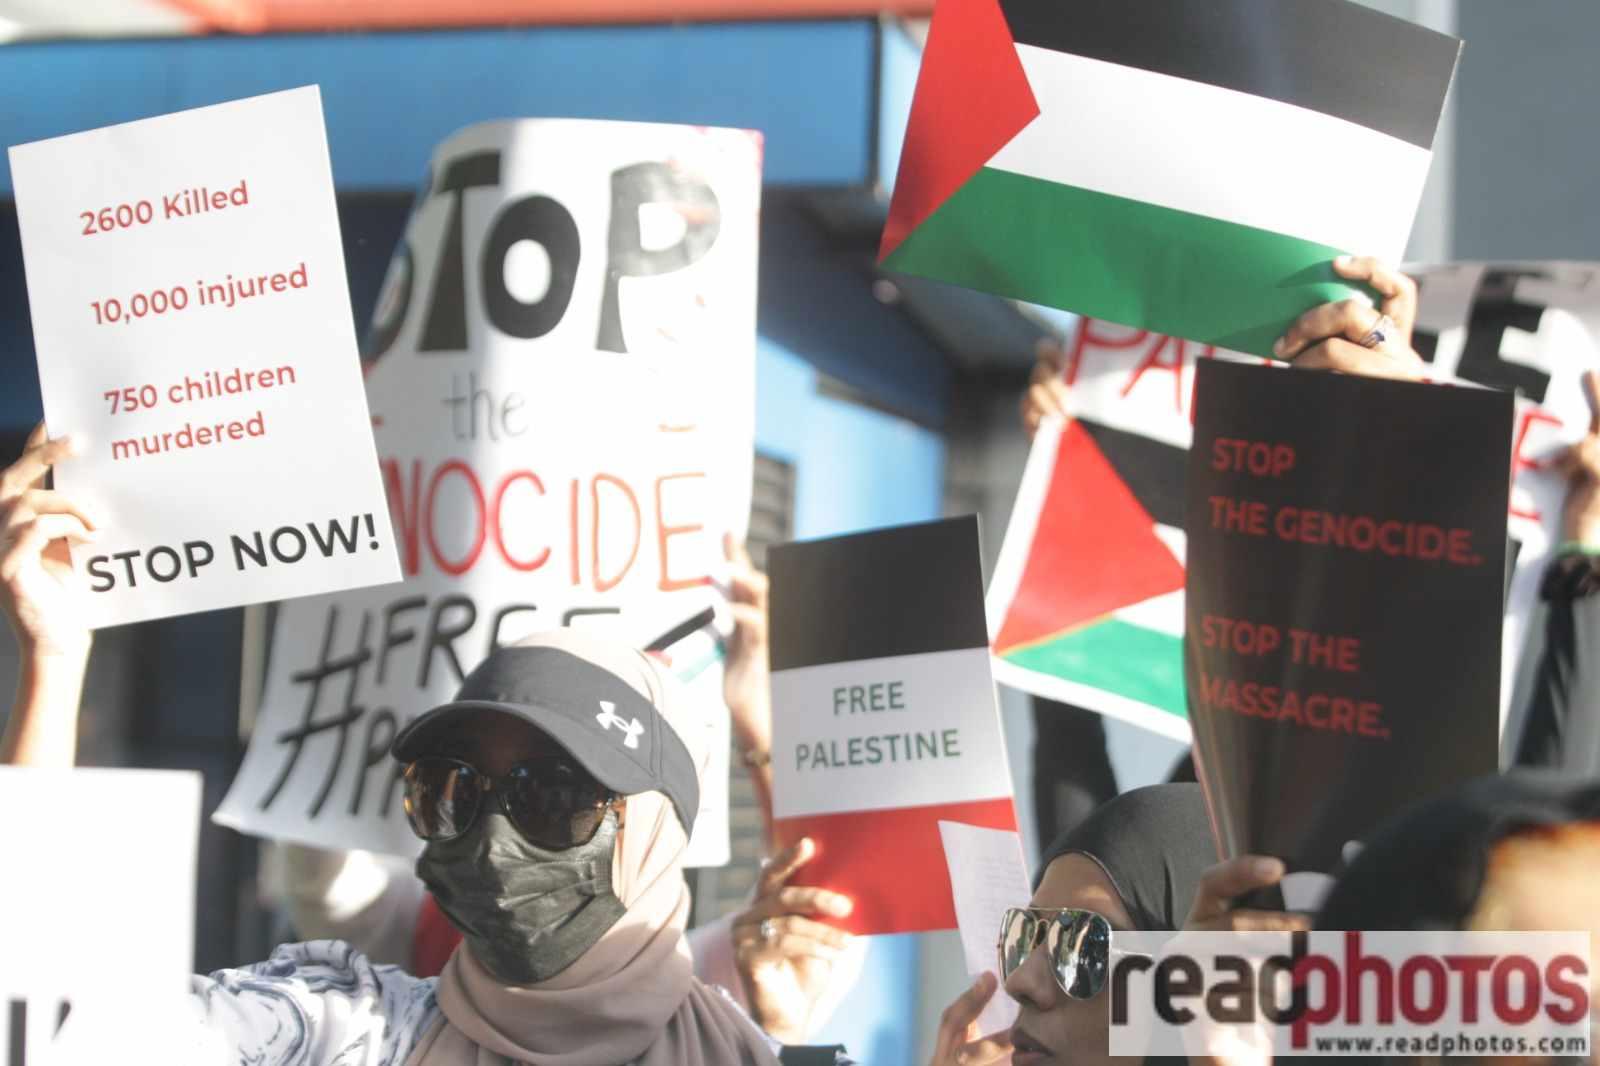 Free Palestine Protest